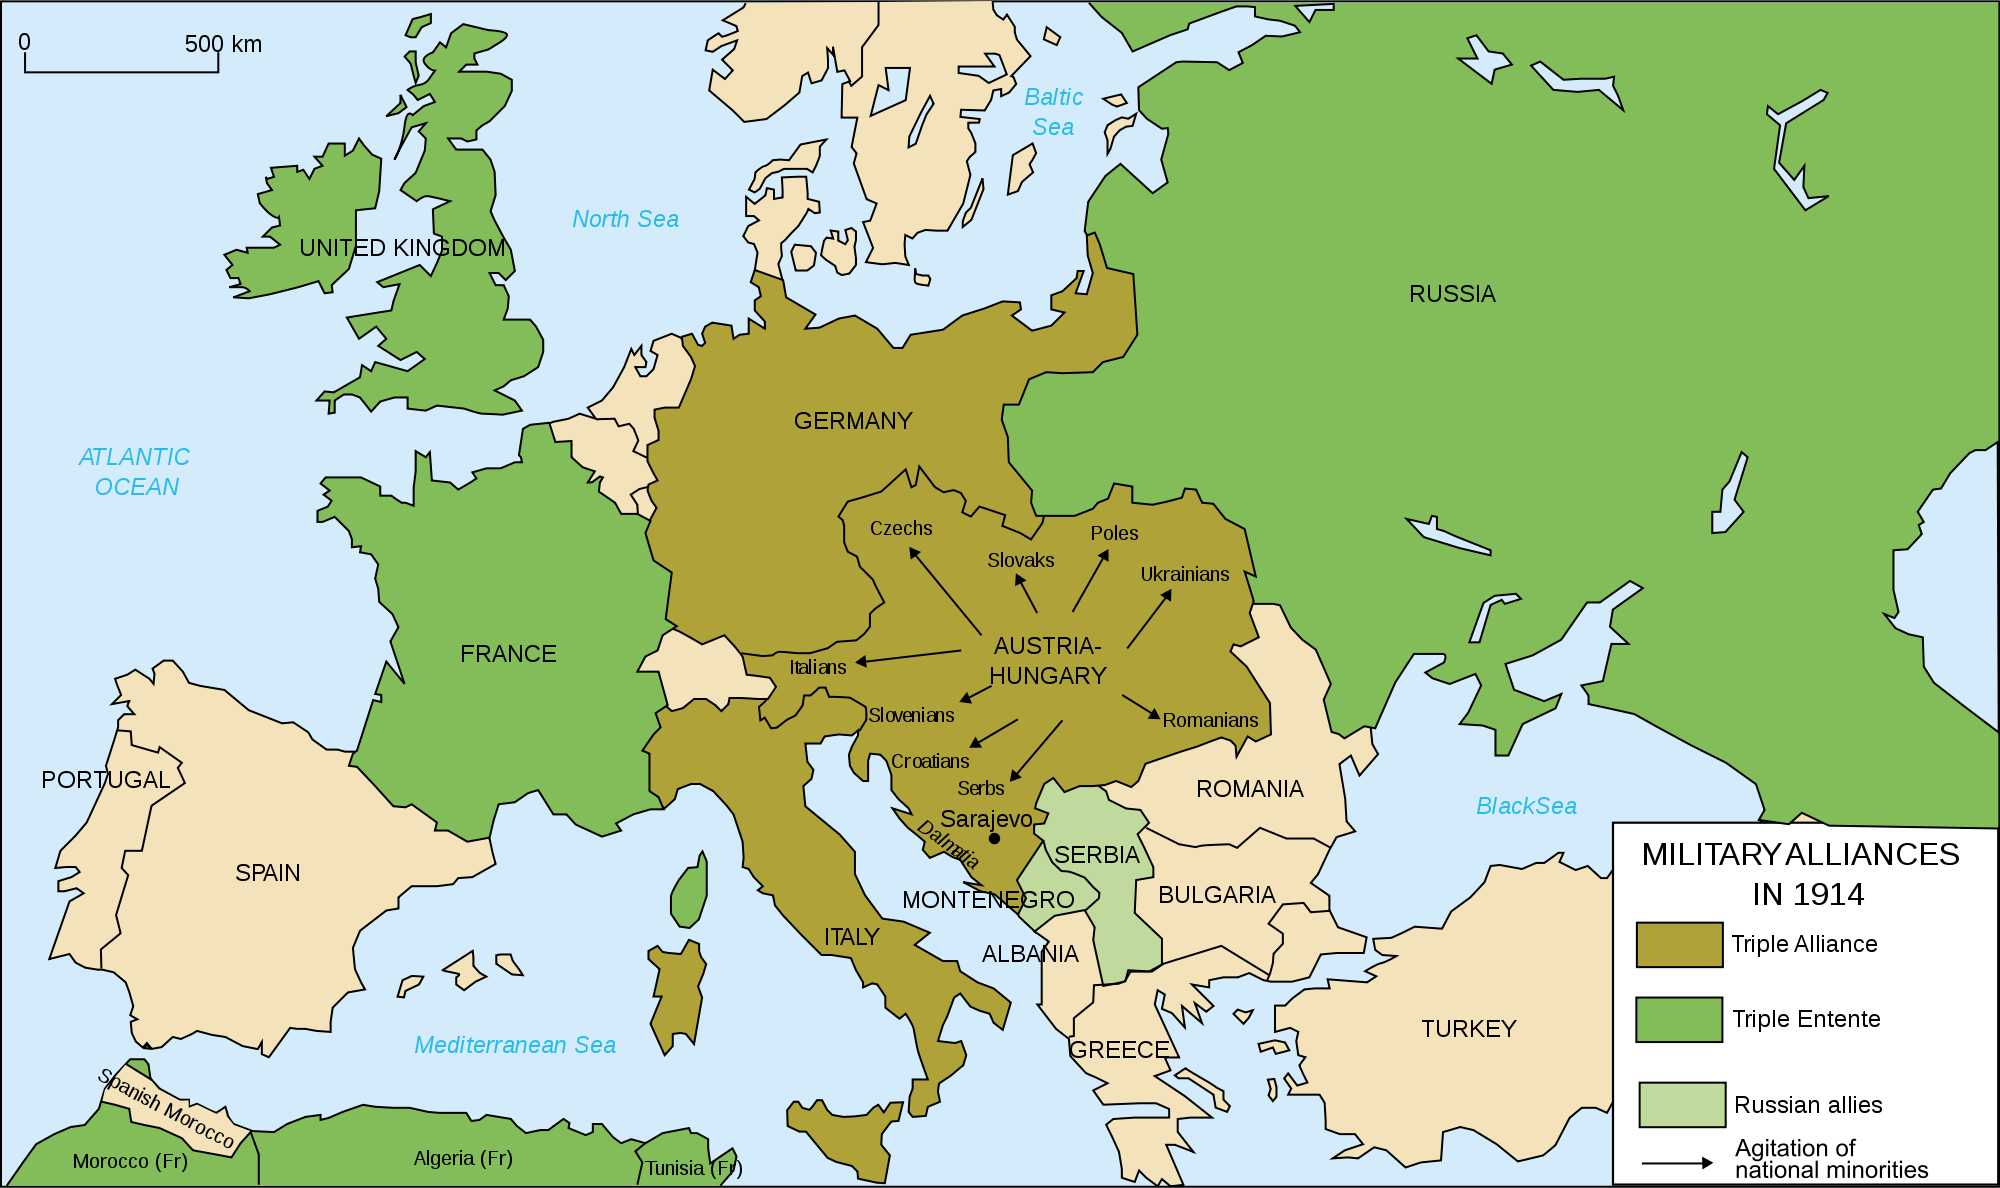 Europe's military alliances in World War I, 1914